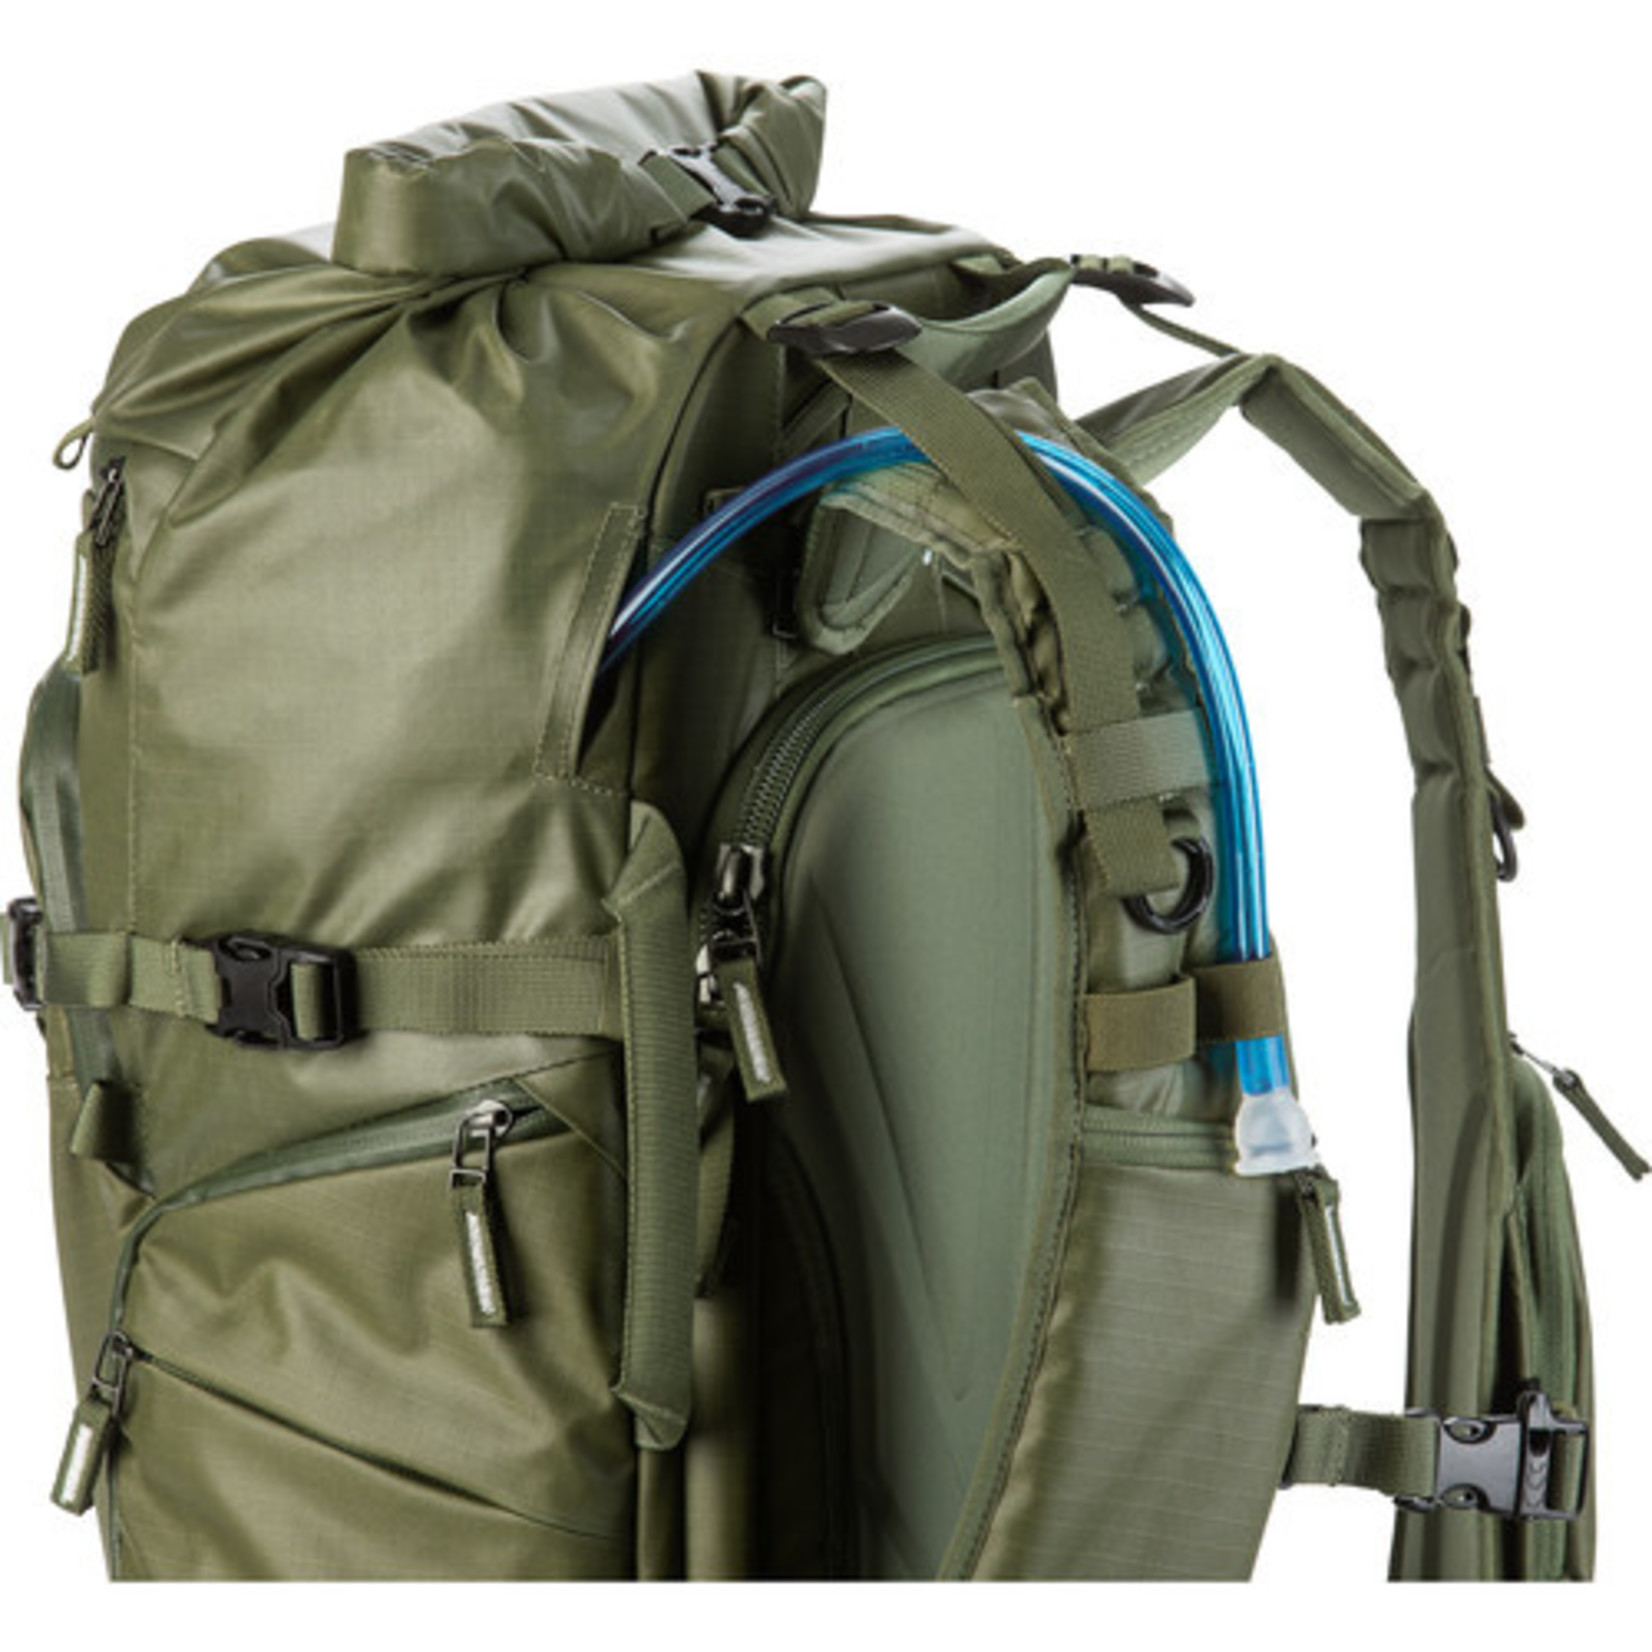 Shimoda Shimoda Designs Action X30 Backpack Starter Kit with Medium Mirrorless Core Unit Version 2 (Army Green)